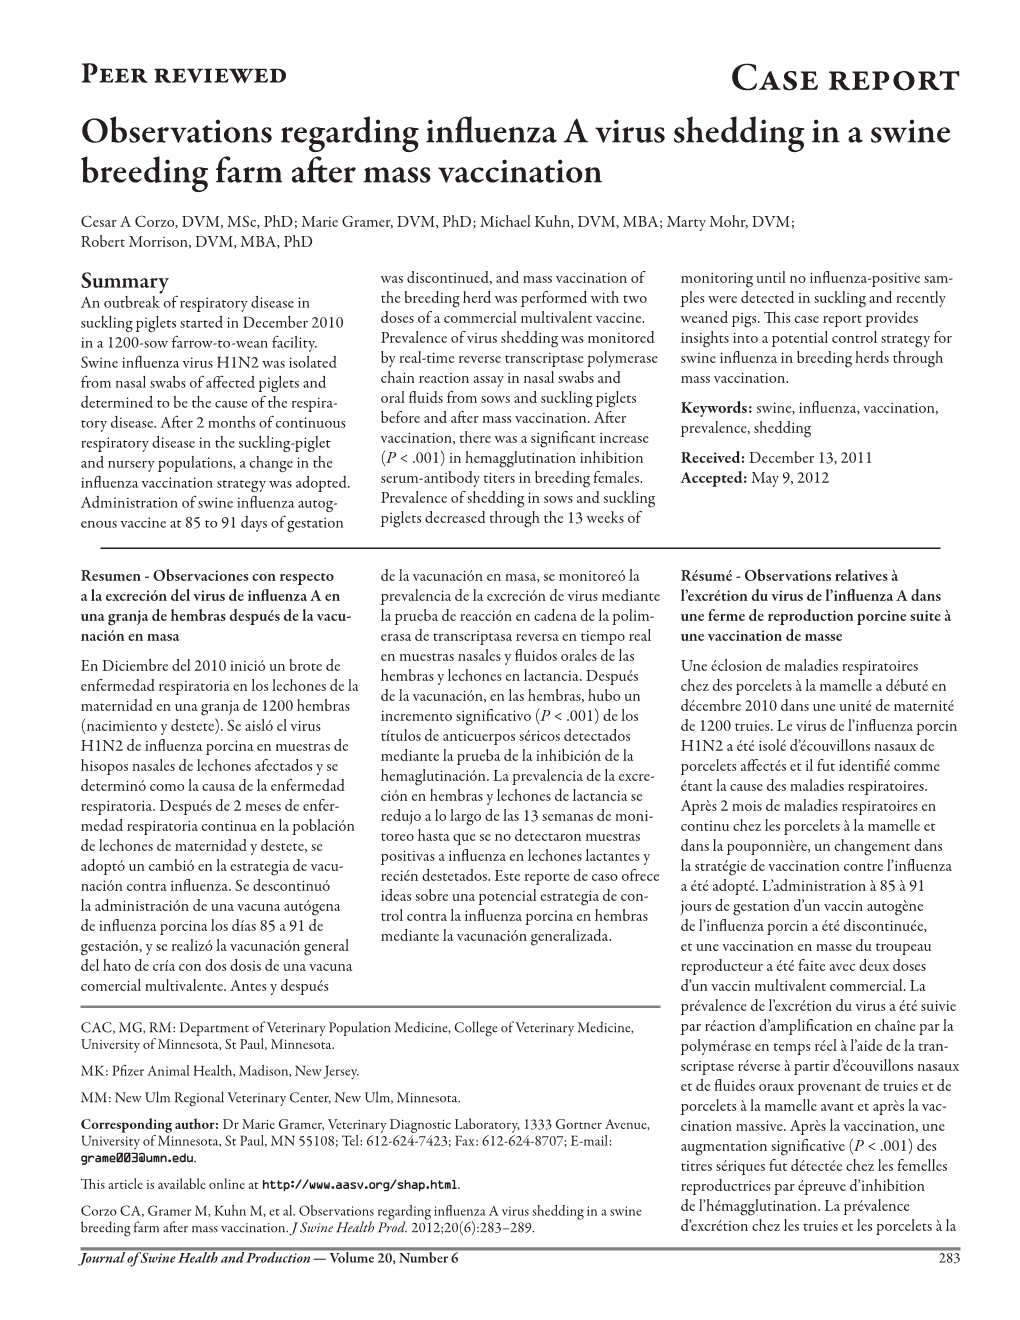 Observations Regarding Influenza a Virus Shedding in a Swine Breeding Farm After Mass Vaccination